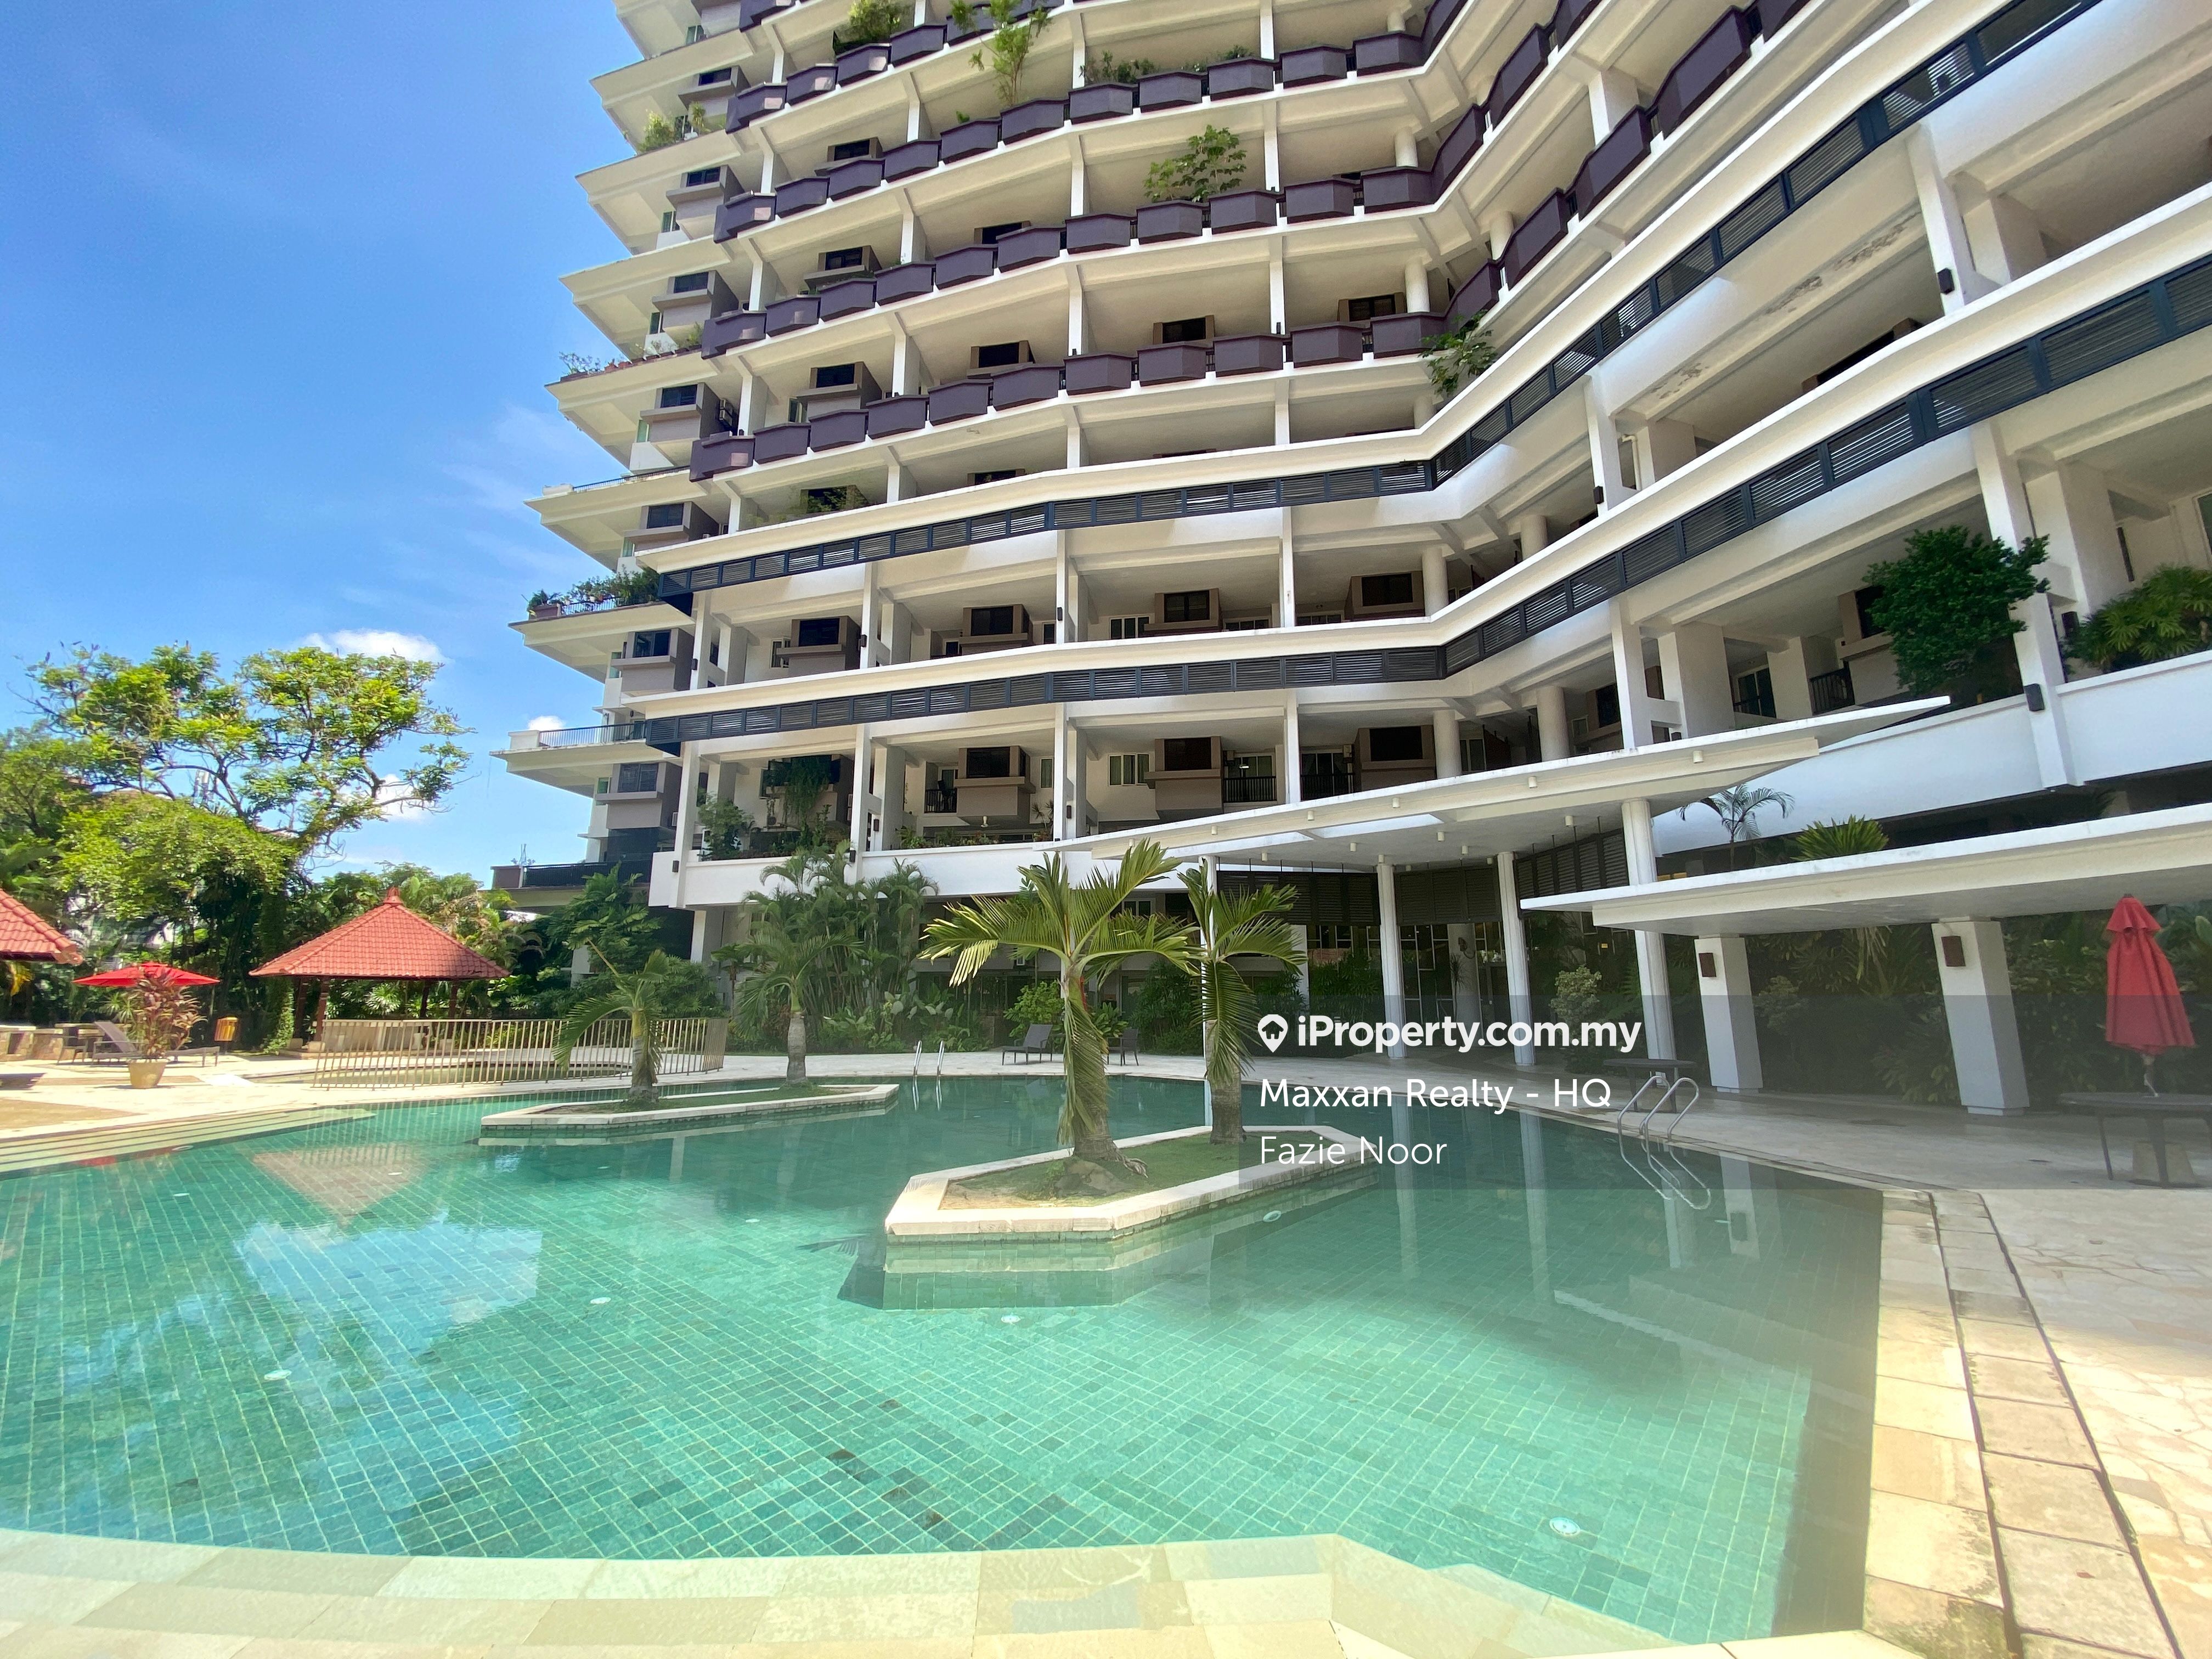 Armanee Terrace, Damansara Perdana